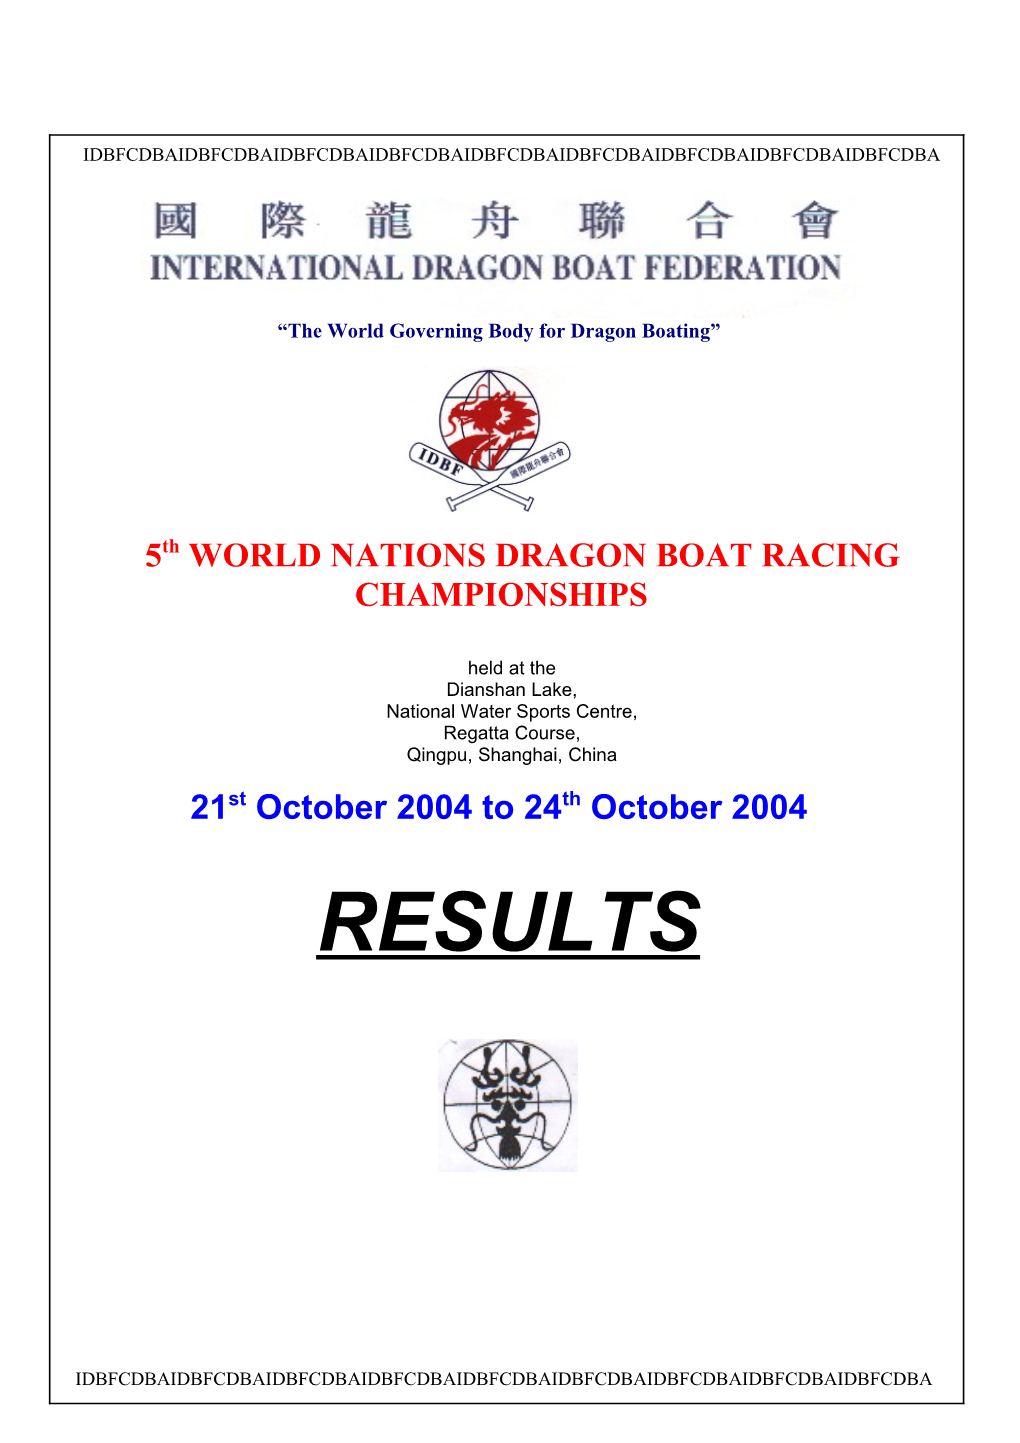 2003 Idbf World Nations Championships Poznan